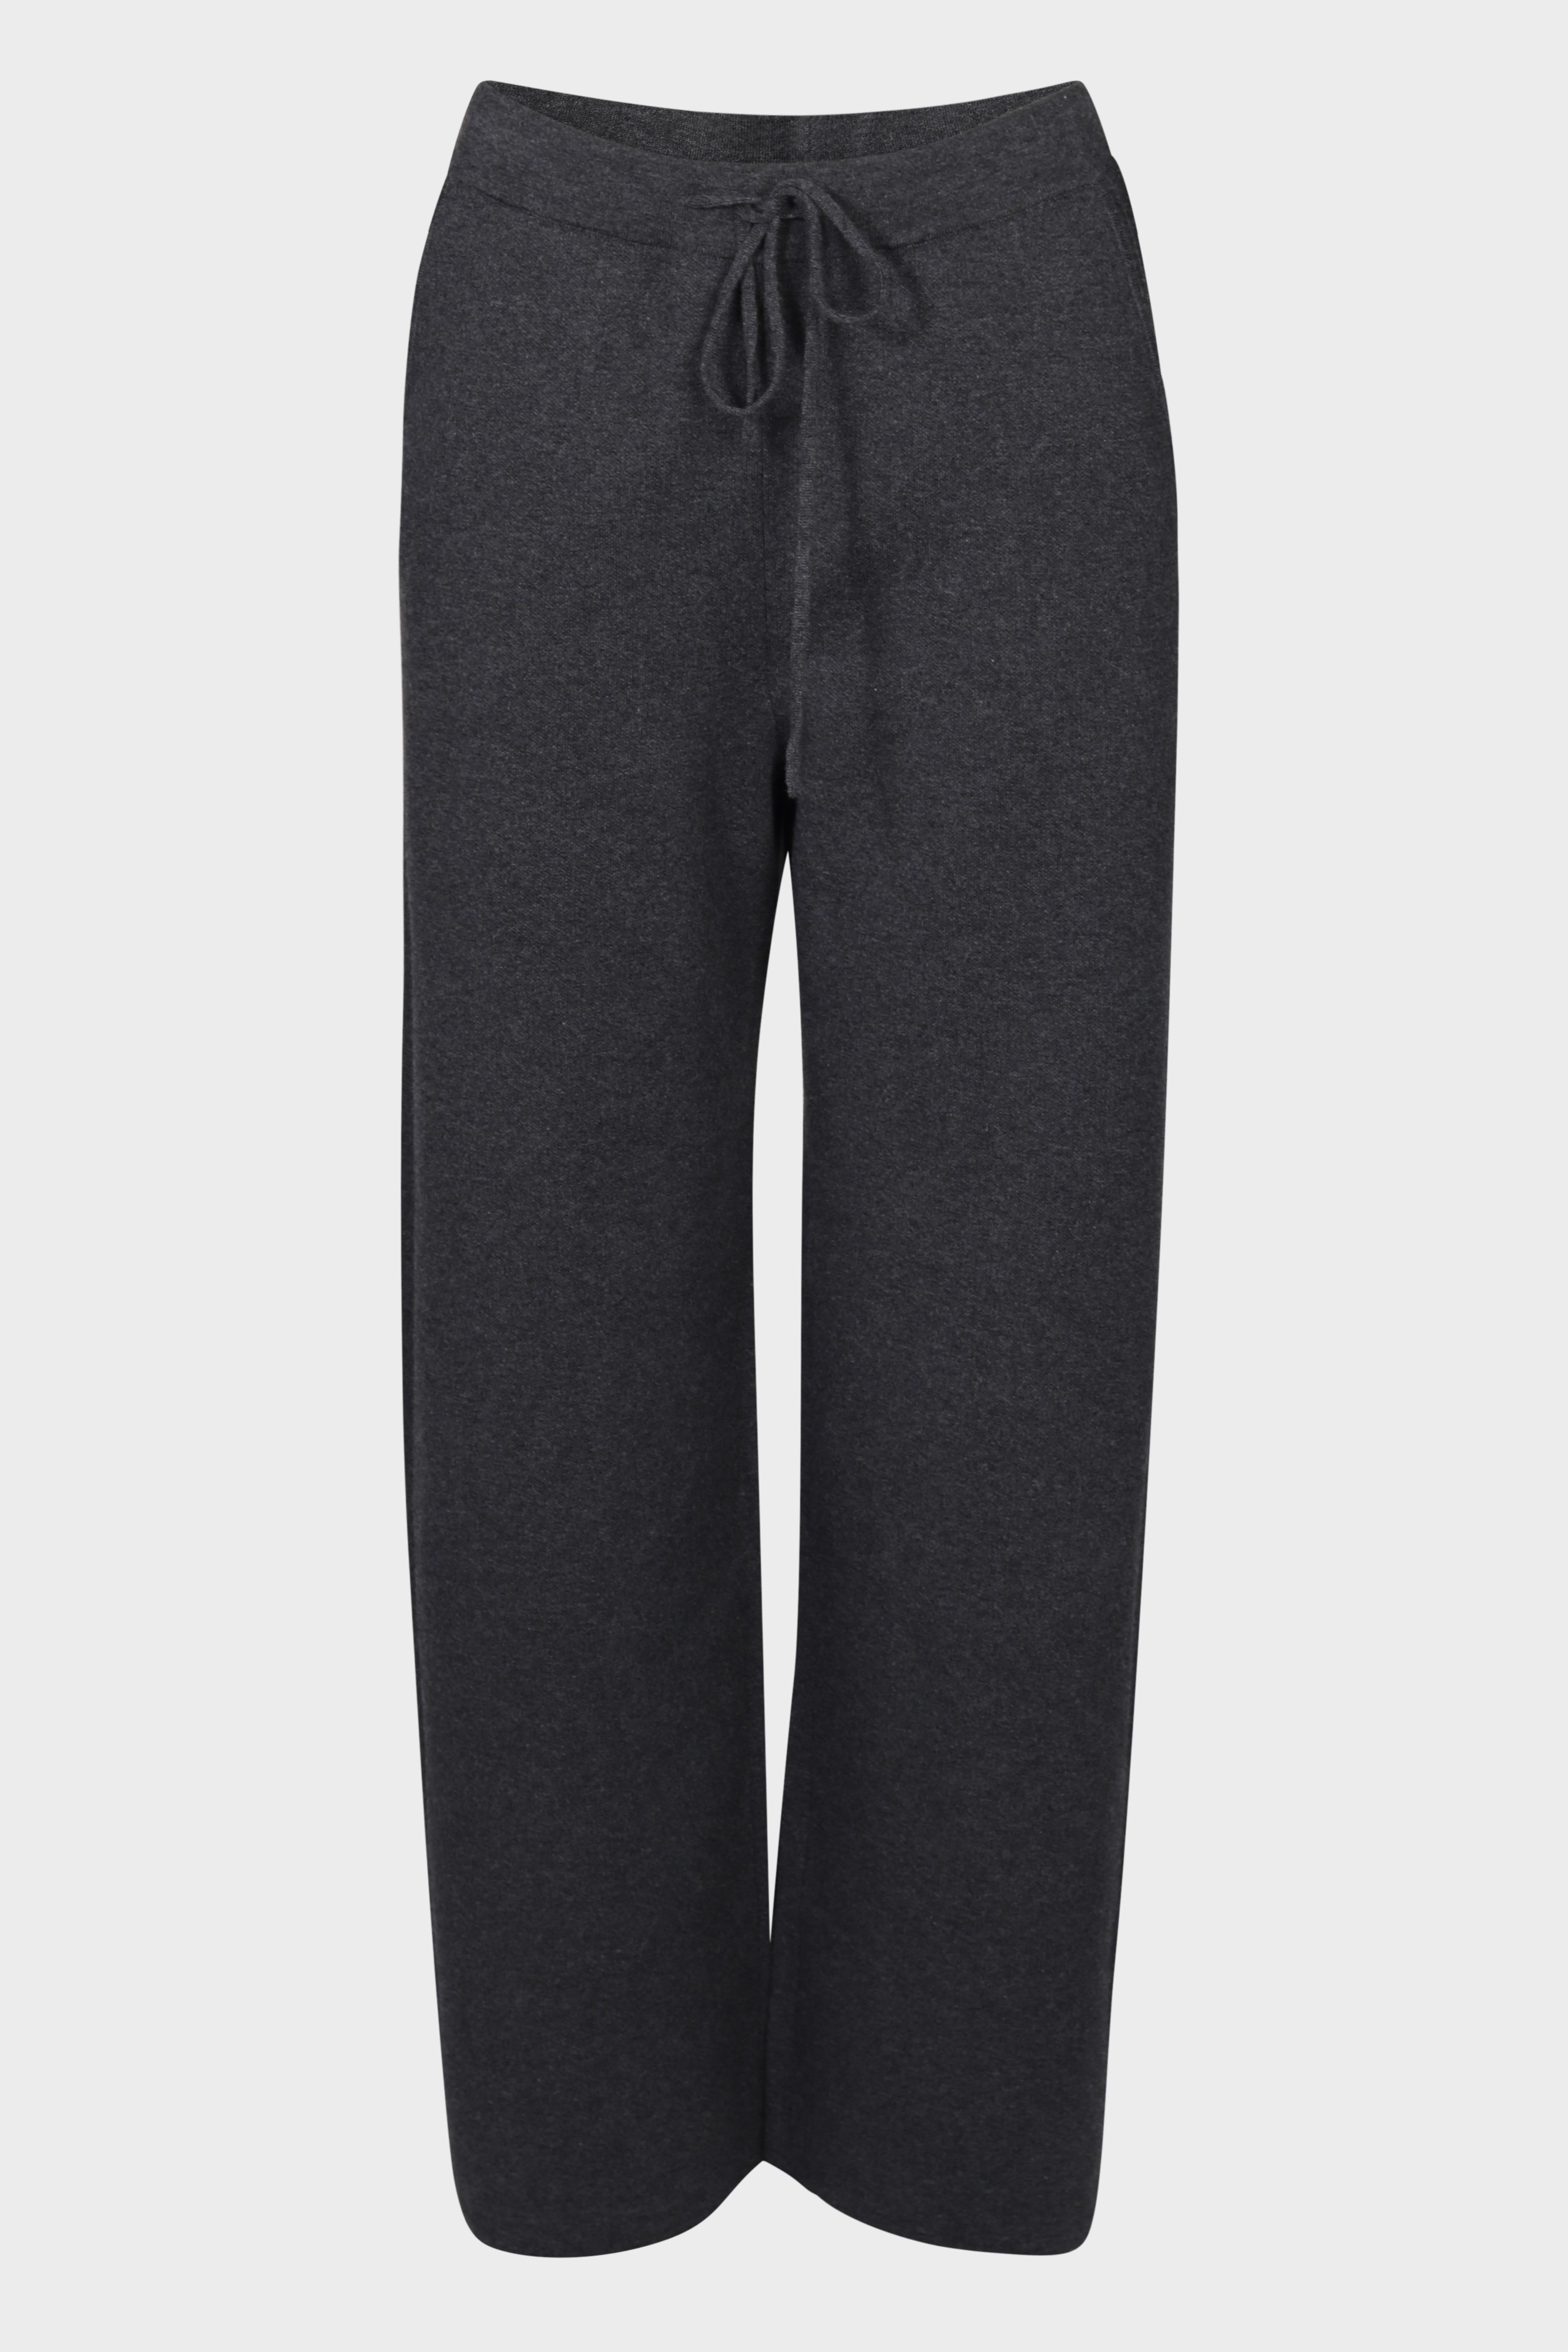 FLONA Cotton/ Cashmere Knit Pant in Dark Grey